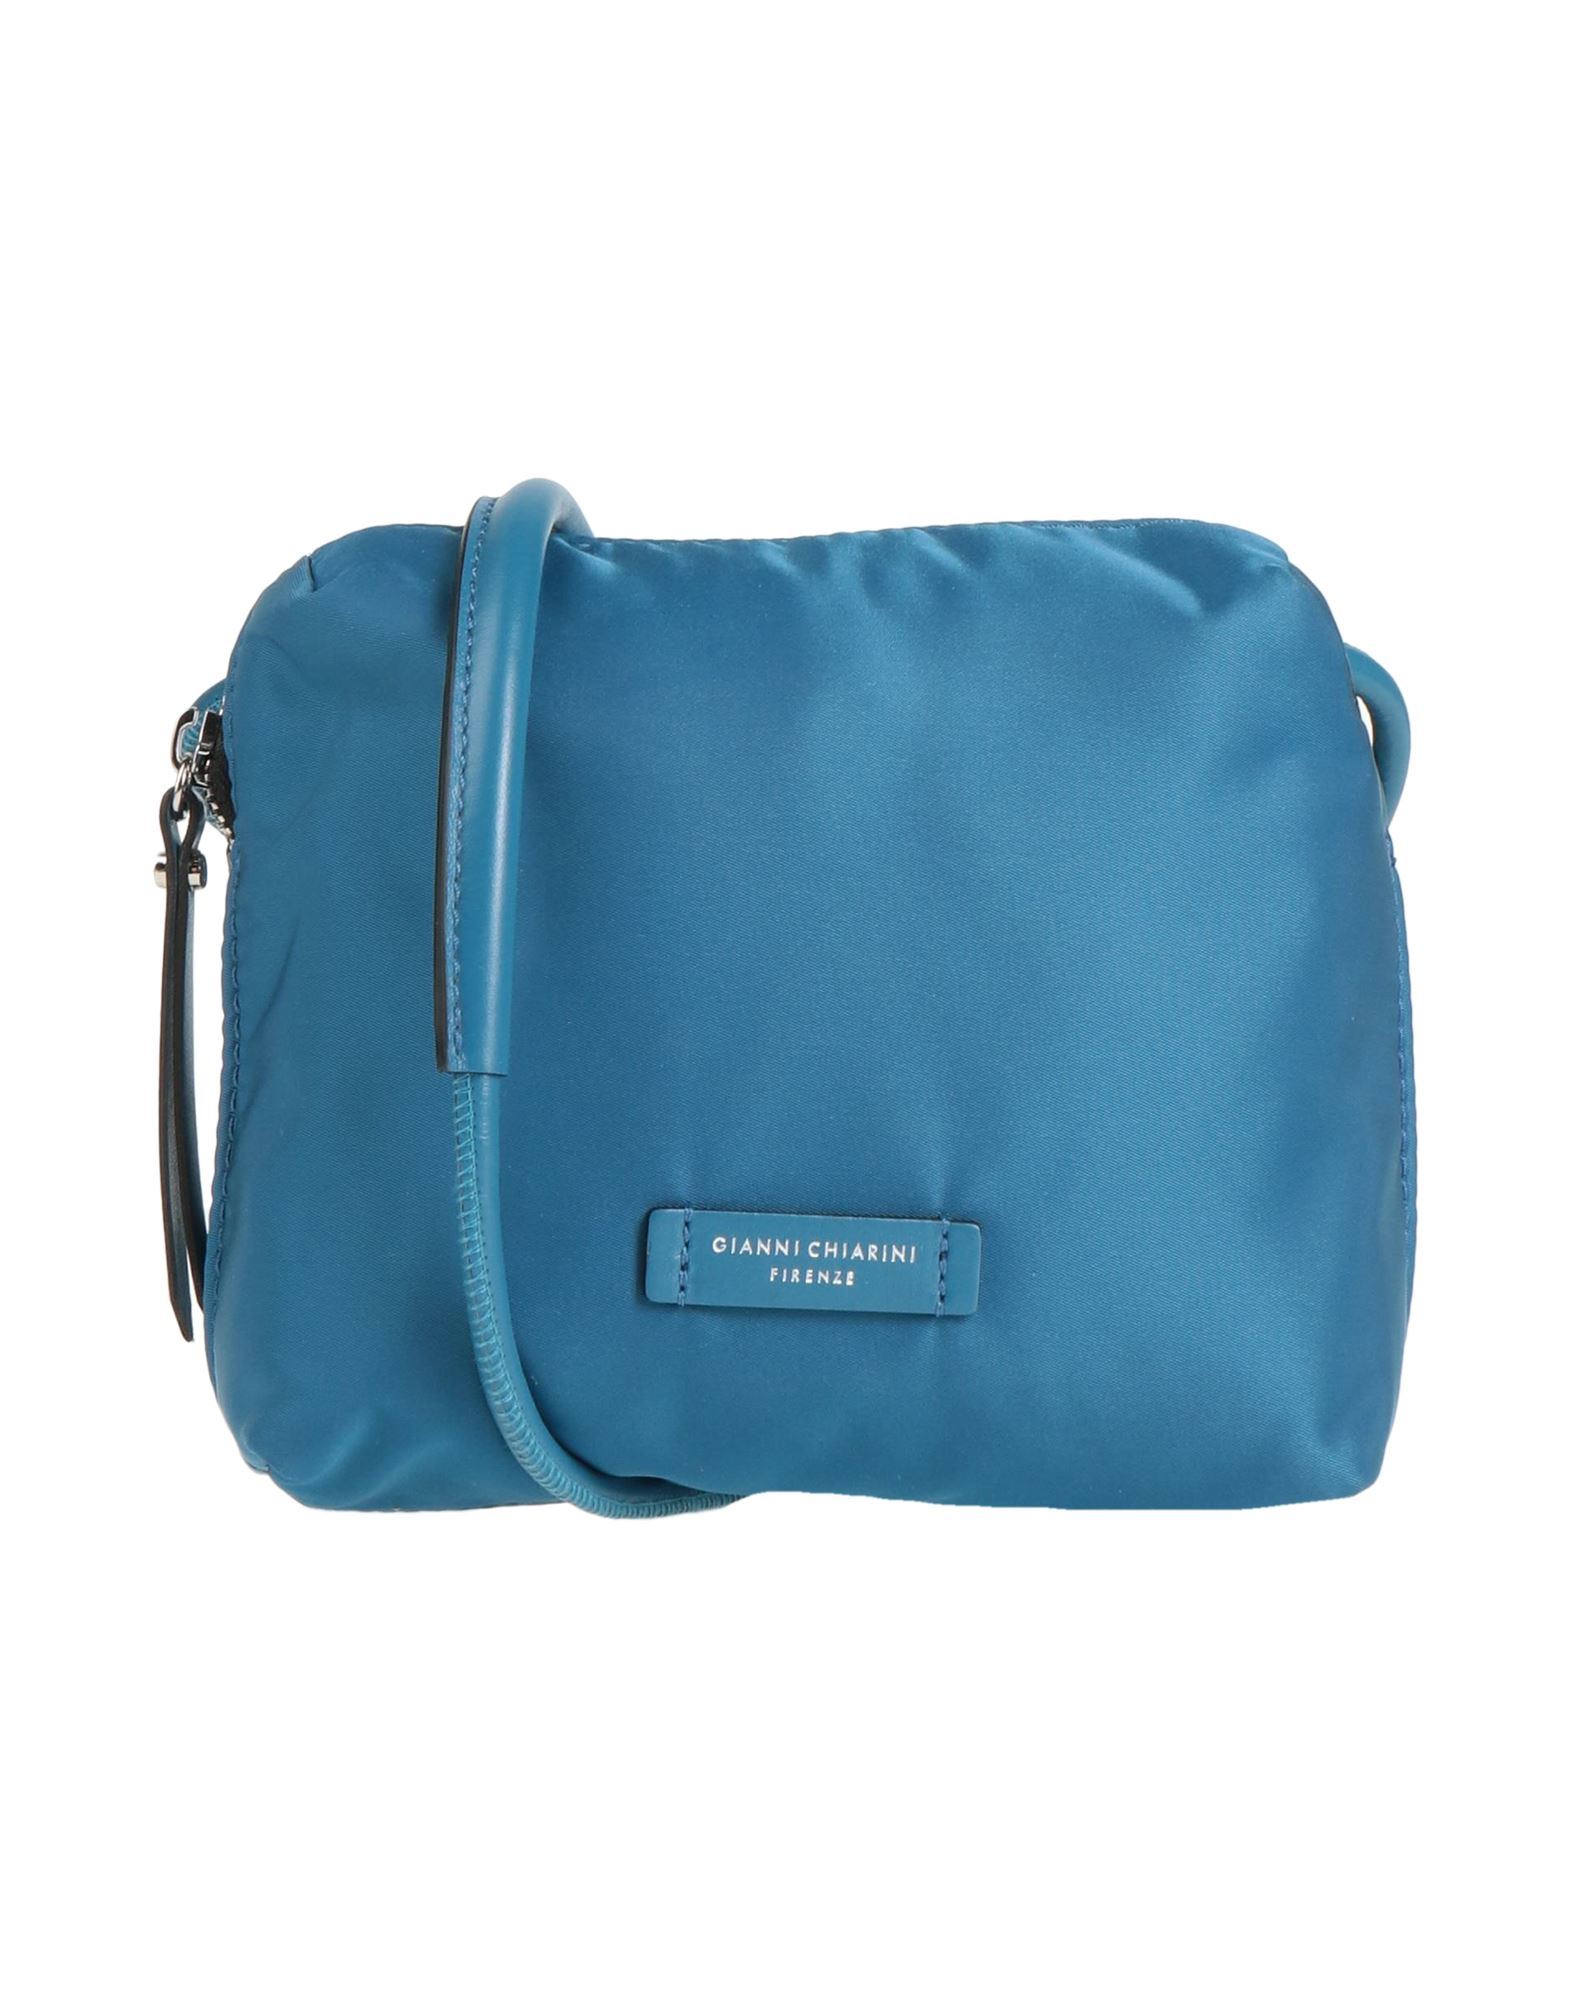 Gianni Chiarini Handbags In Slate Blue